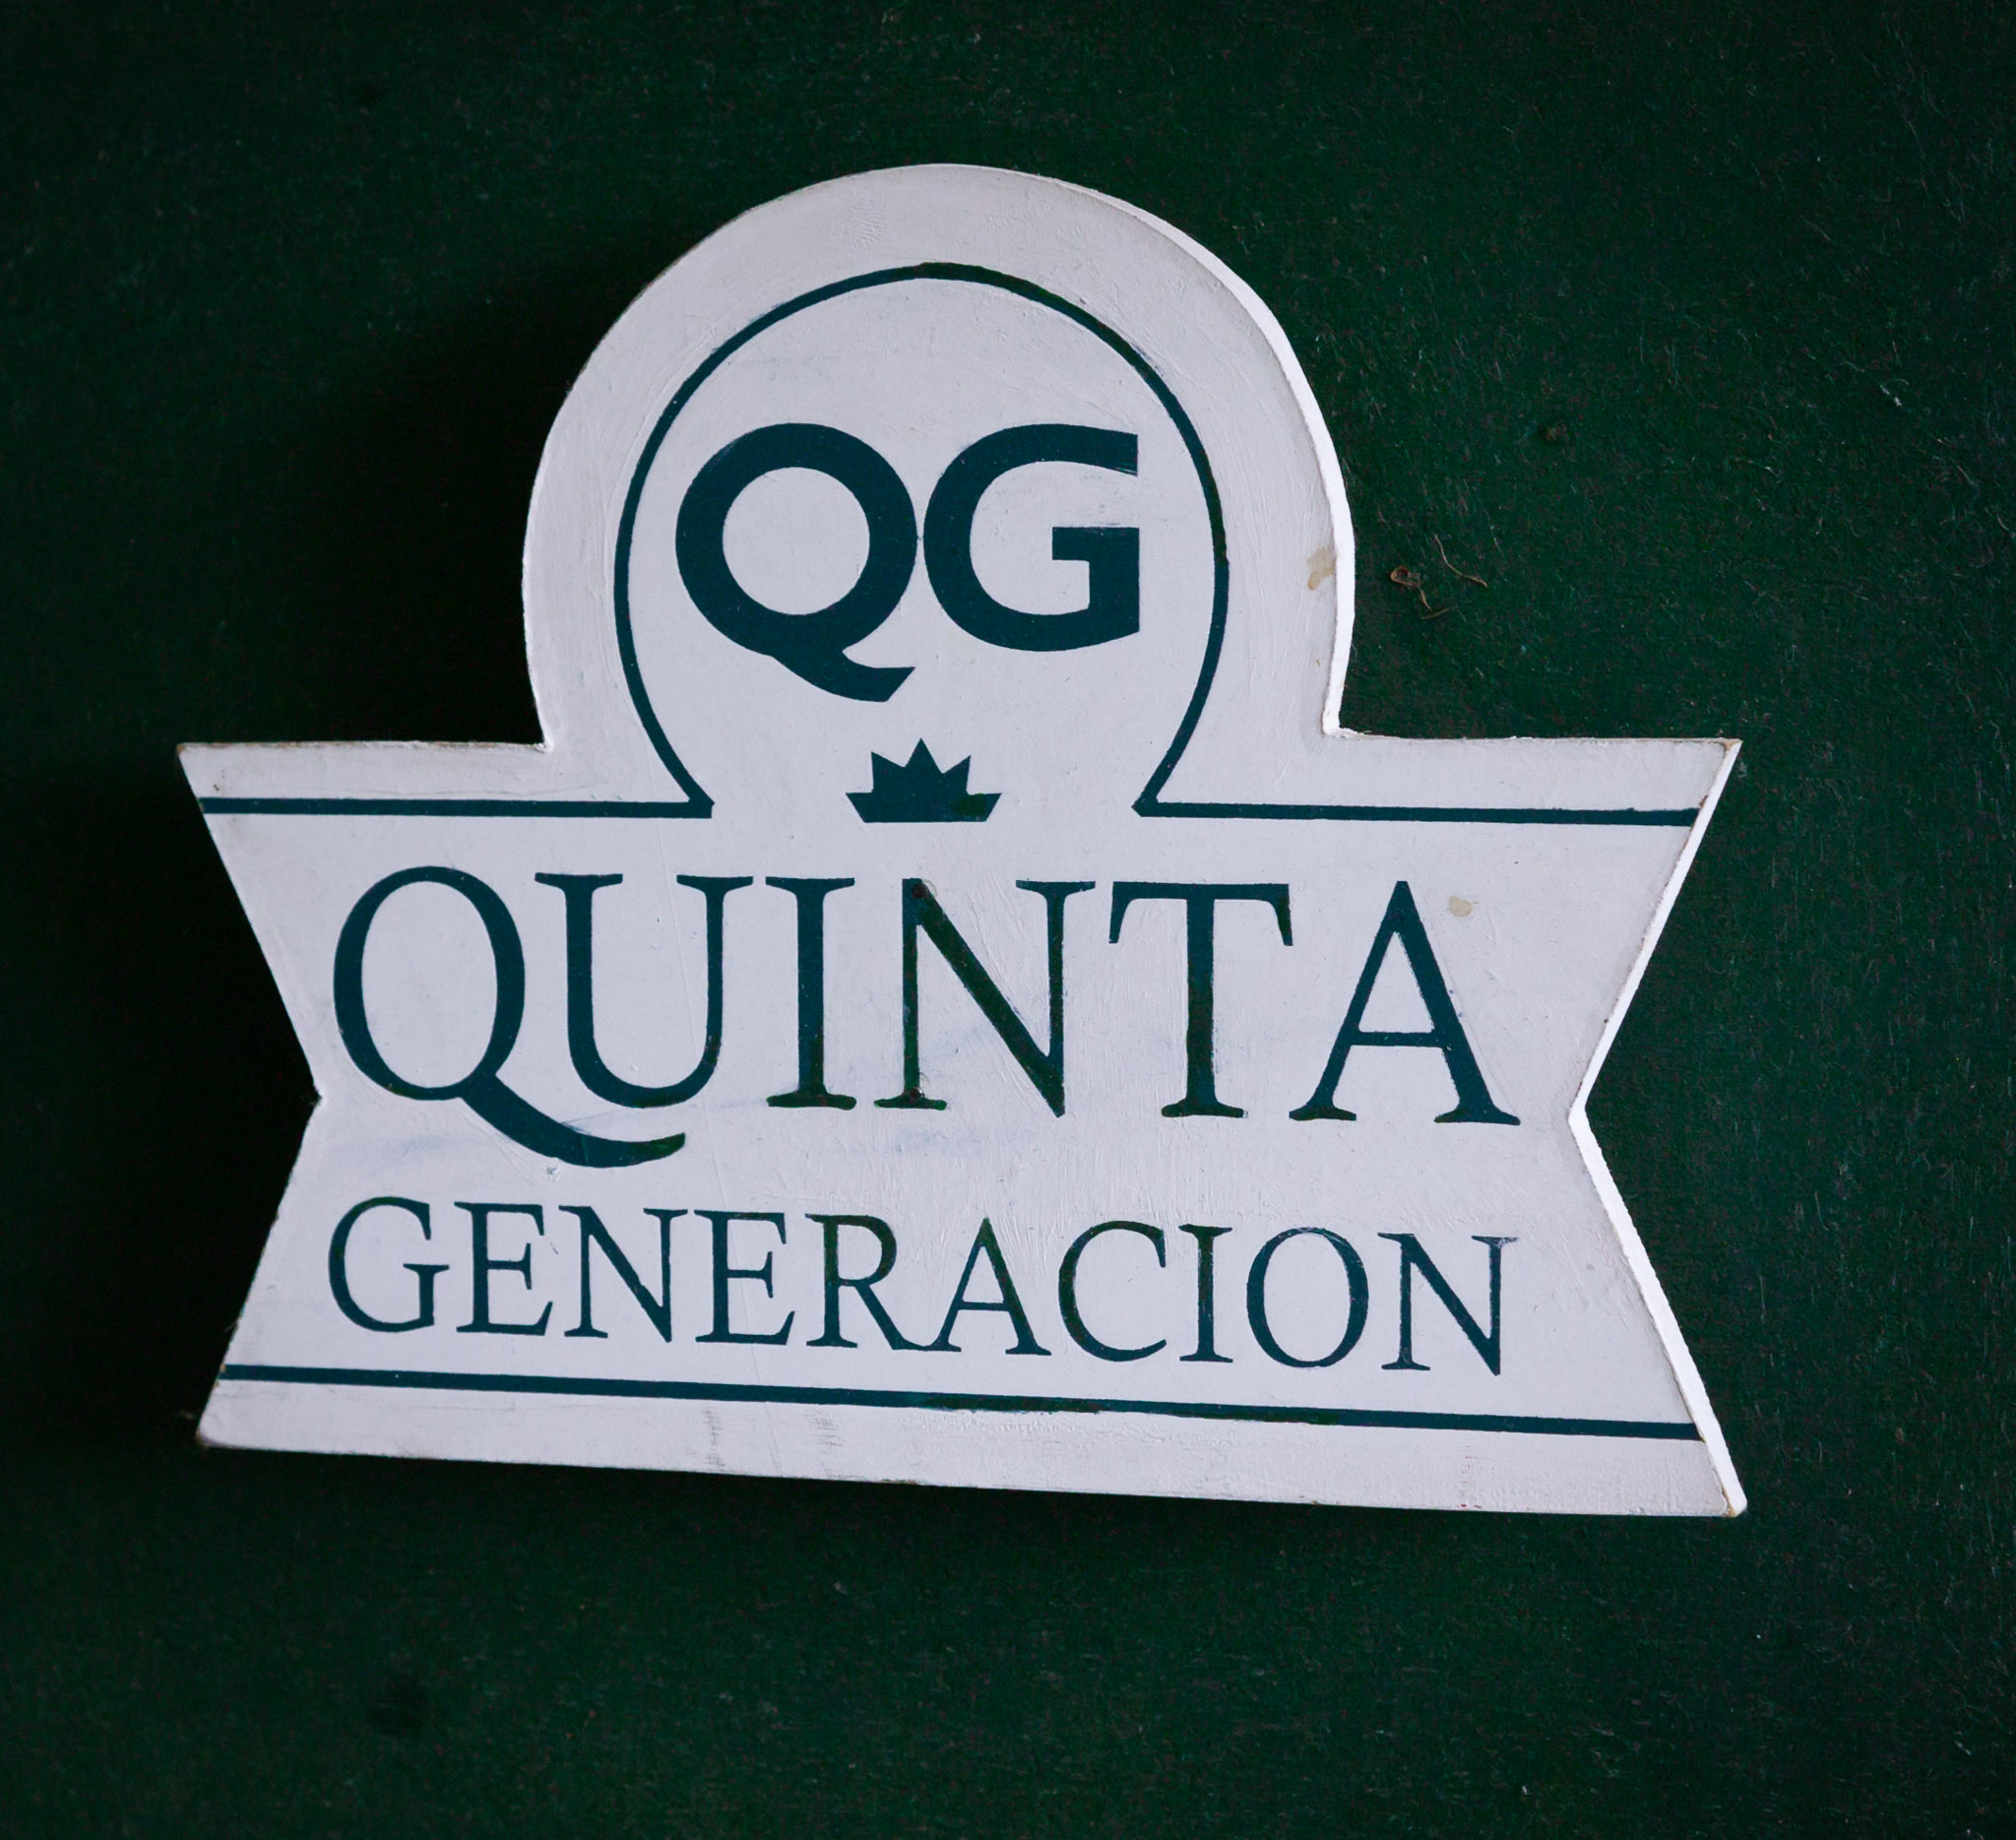 Pasrai Olive Mill, Mendoza – "Five Generations" is brandname